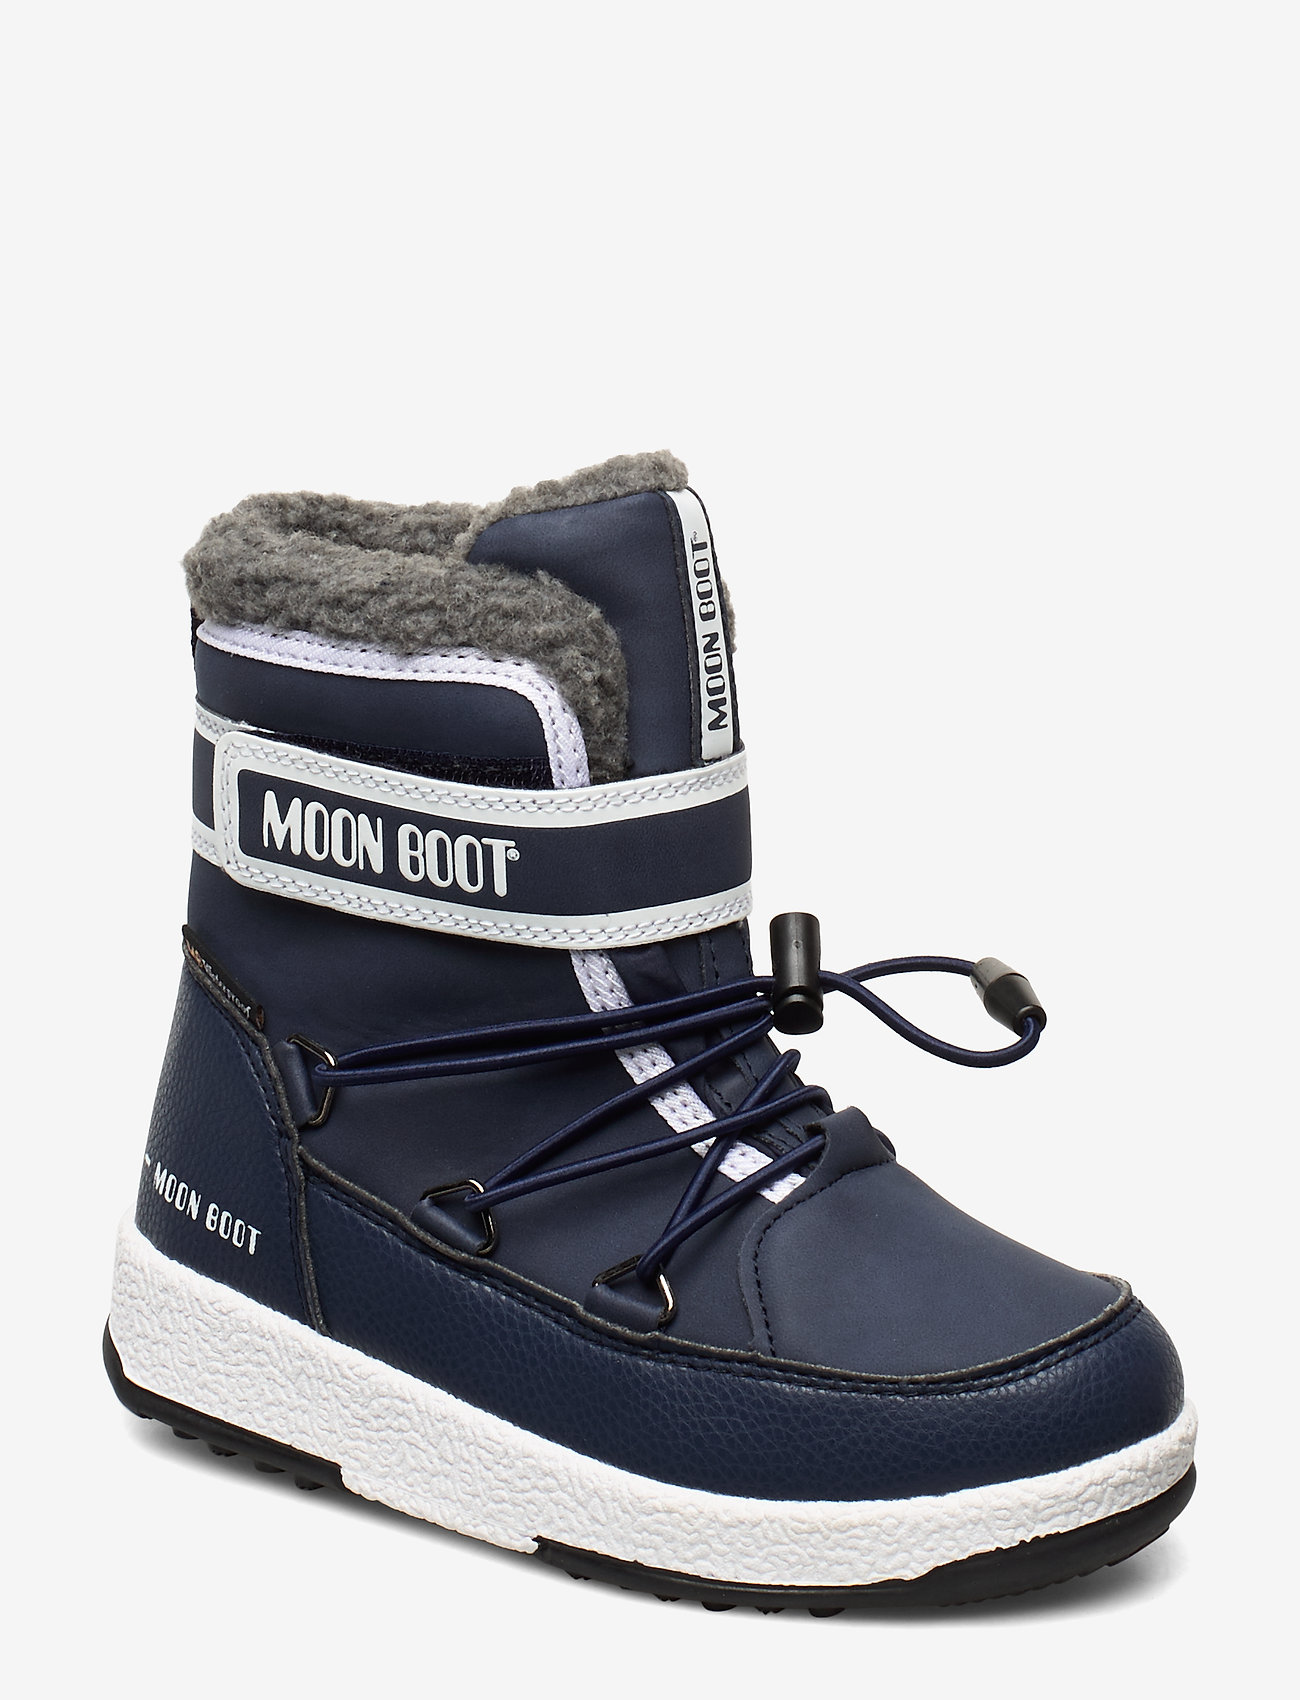 moon boots navy